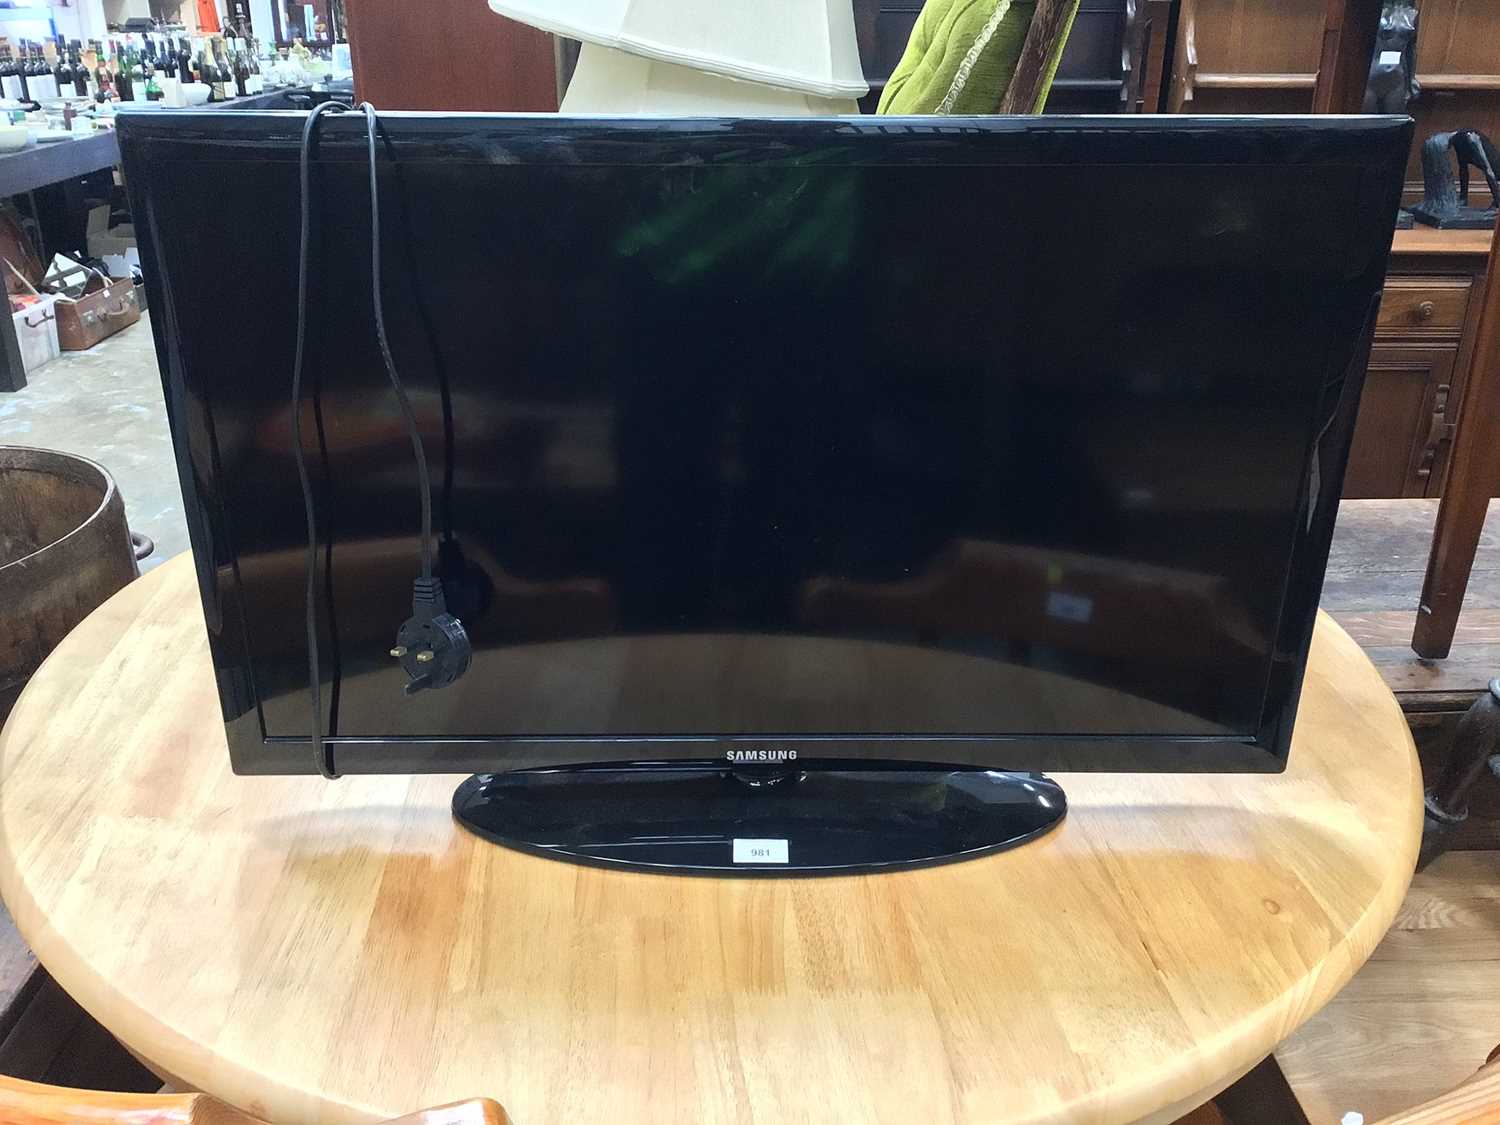 Lot 981 - Samsung flatscreen television - model no UE32D4003BW